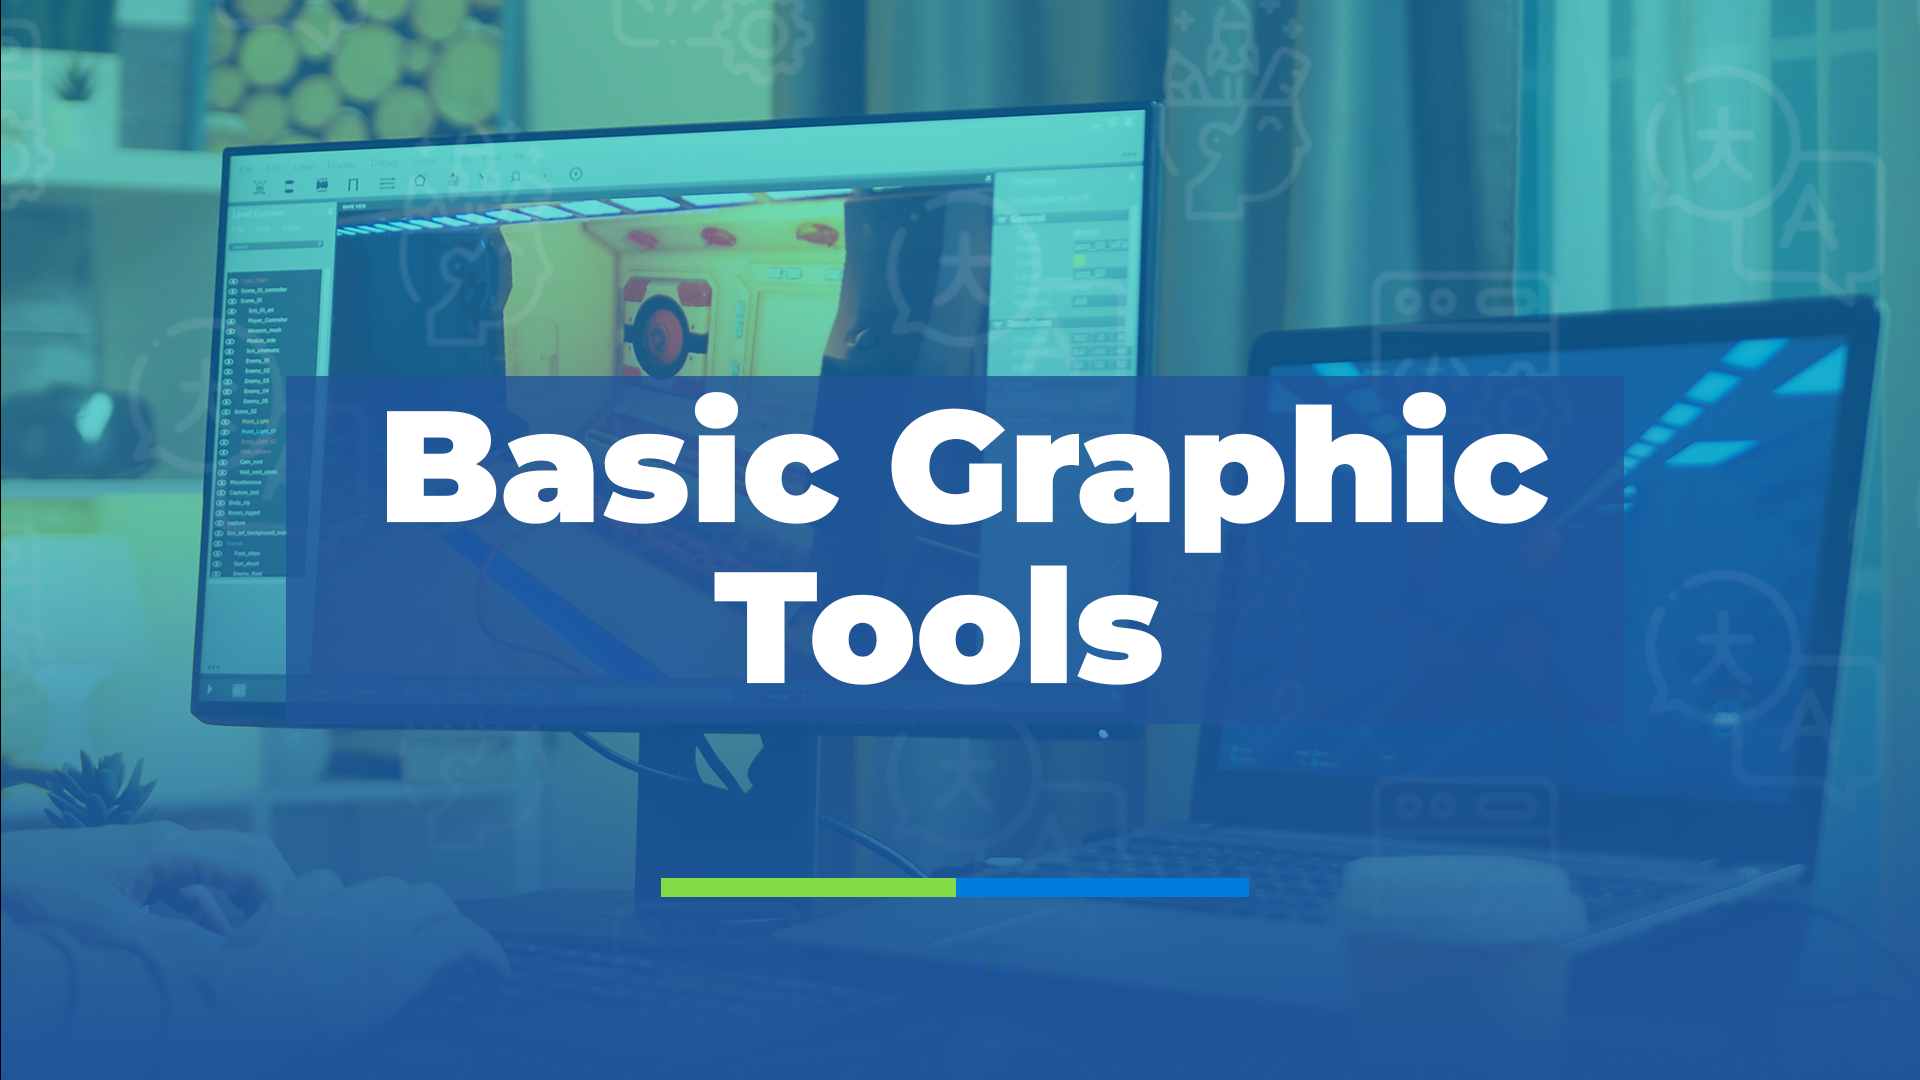 Basic Graphic Tools